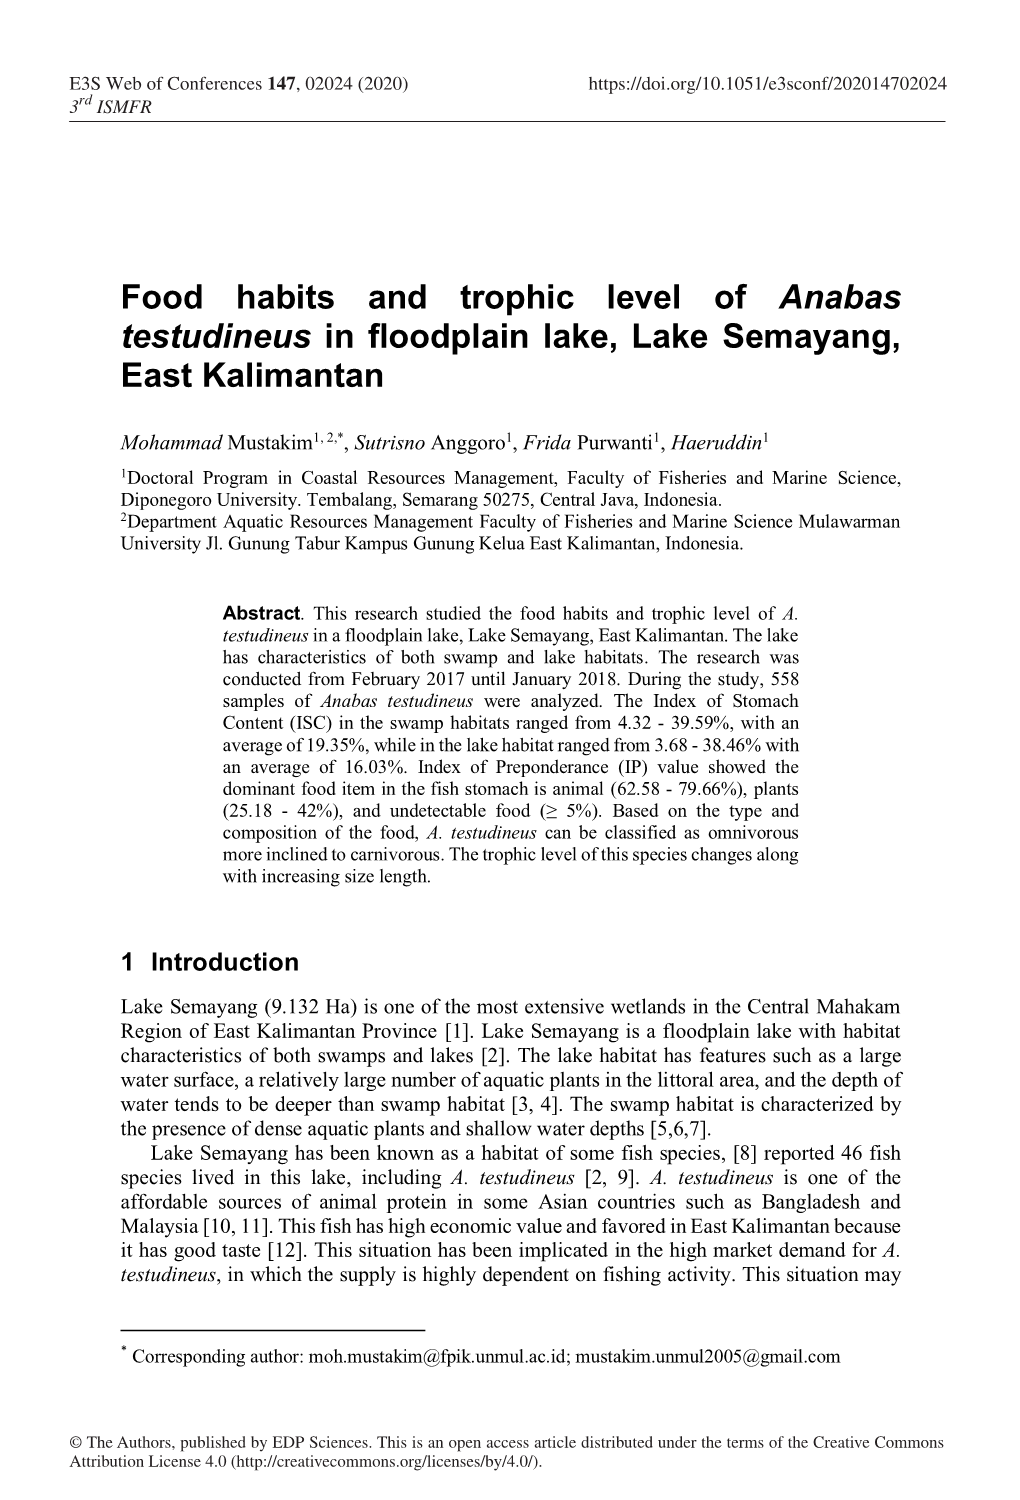 Food Habits and Trophic Level of Anabas Testudineus in Floodplain Lake, Lake Semayang, East Kalimantan